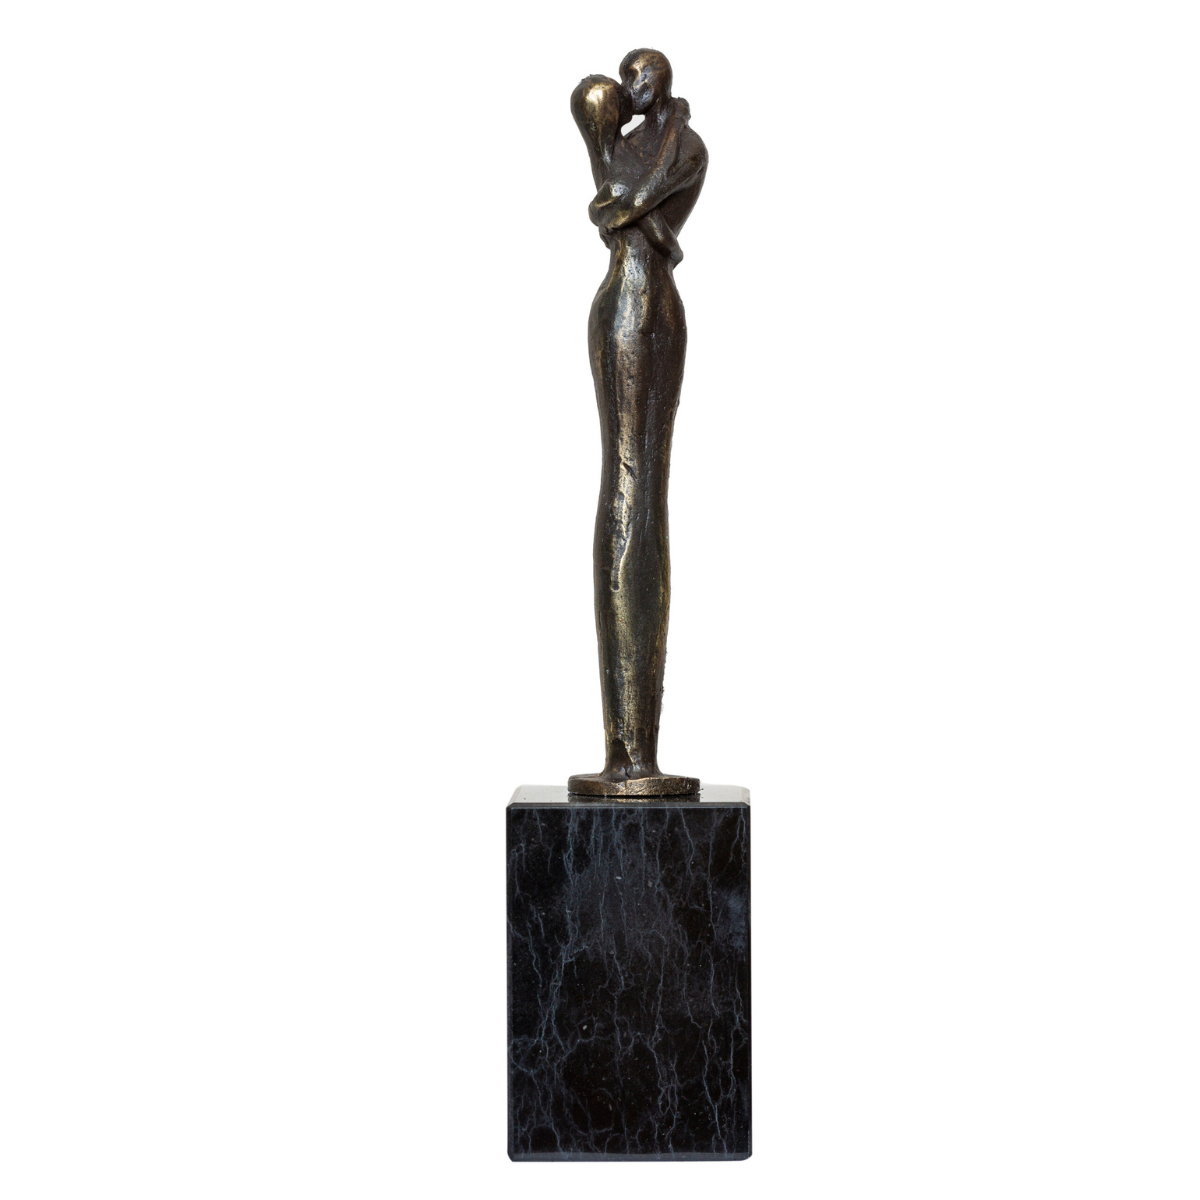 Mark Jurriens - Innige omhelzing | Sculptuur